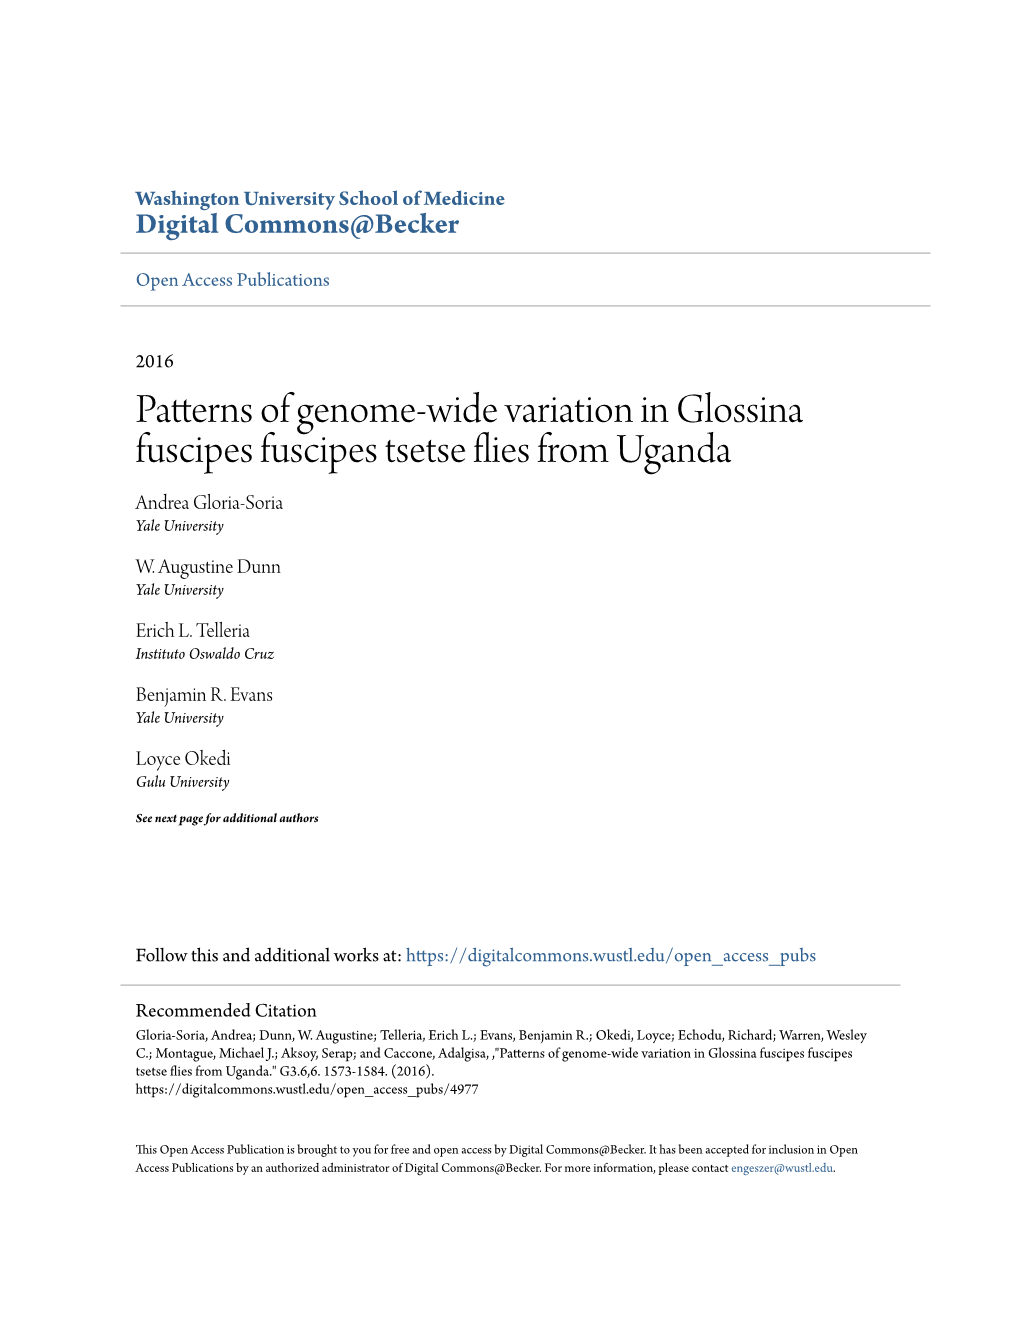 Patterns of Genome-Wide Variation in Glossina Fuscipes Fuscipes Tsetse Flies from Uganda Andrea Gloria-Soria Yale University